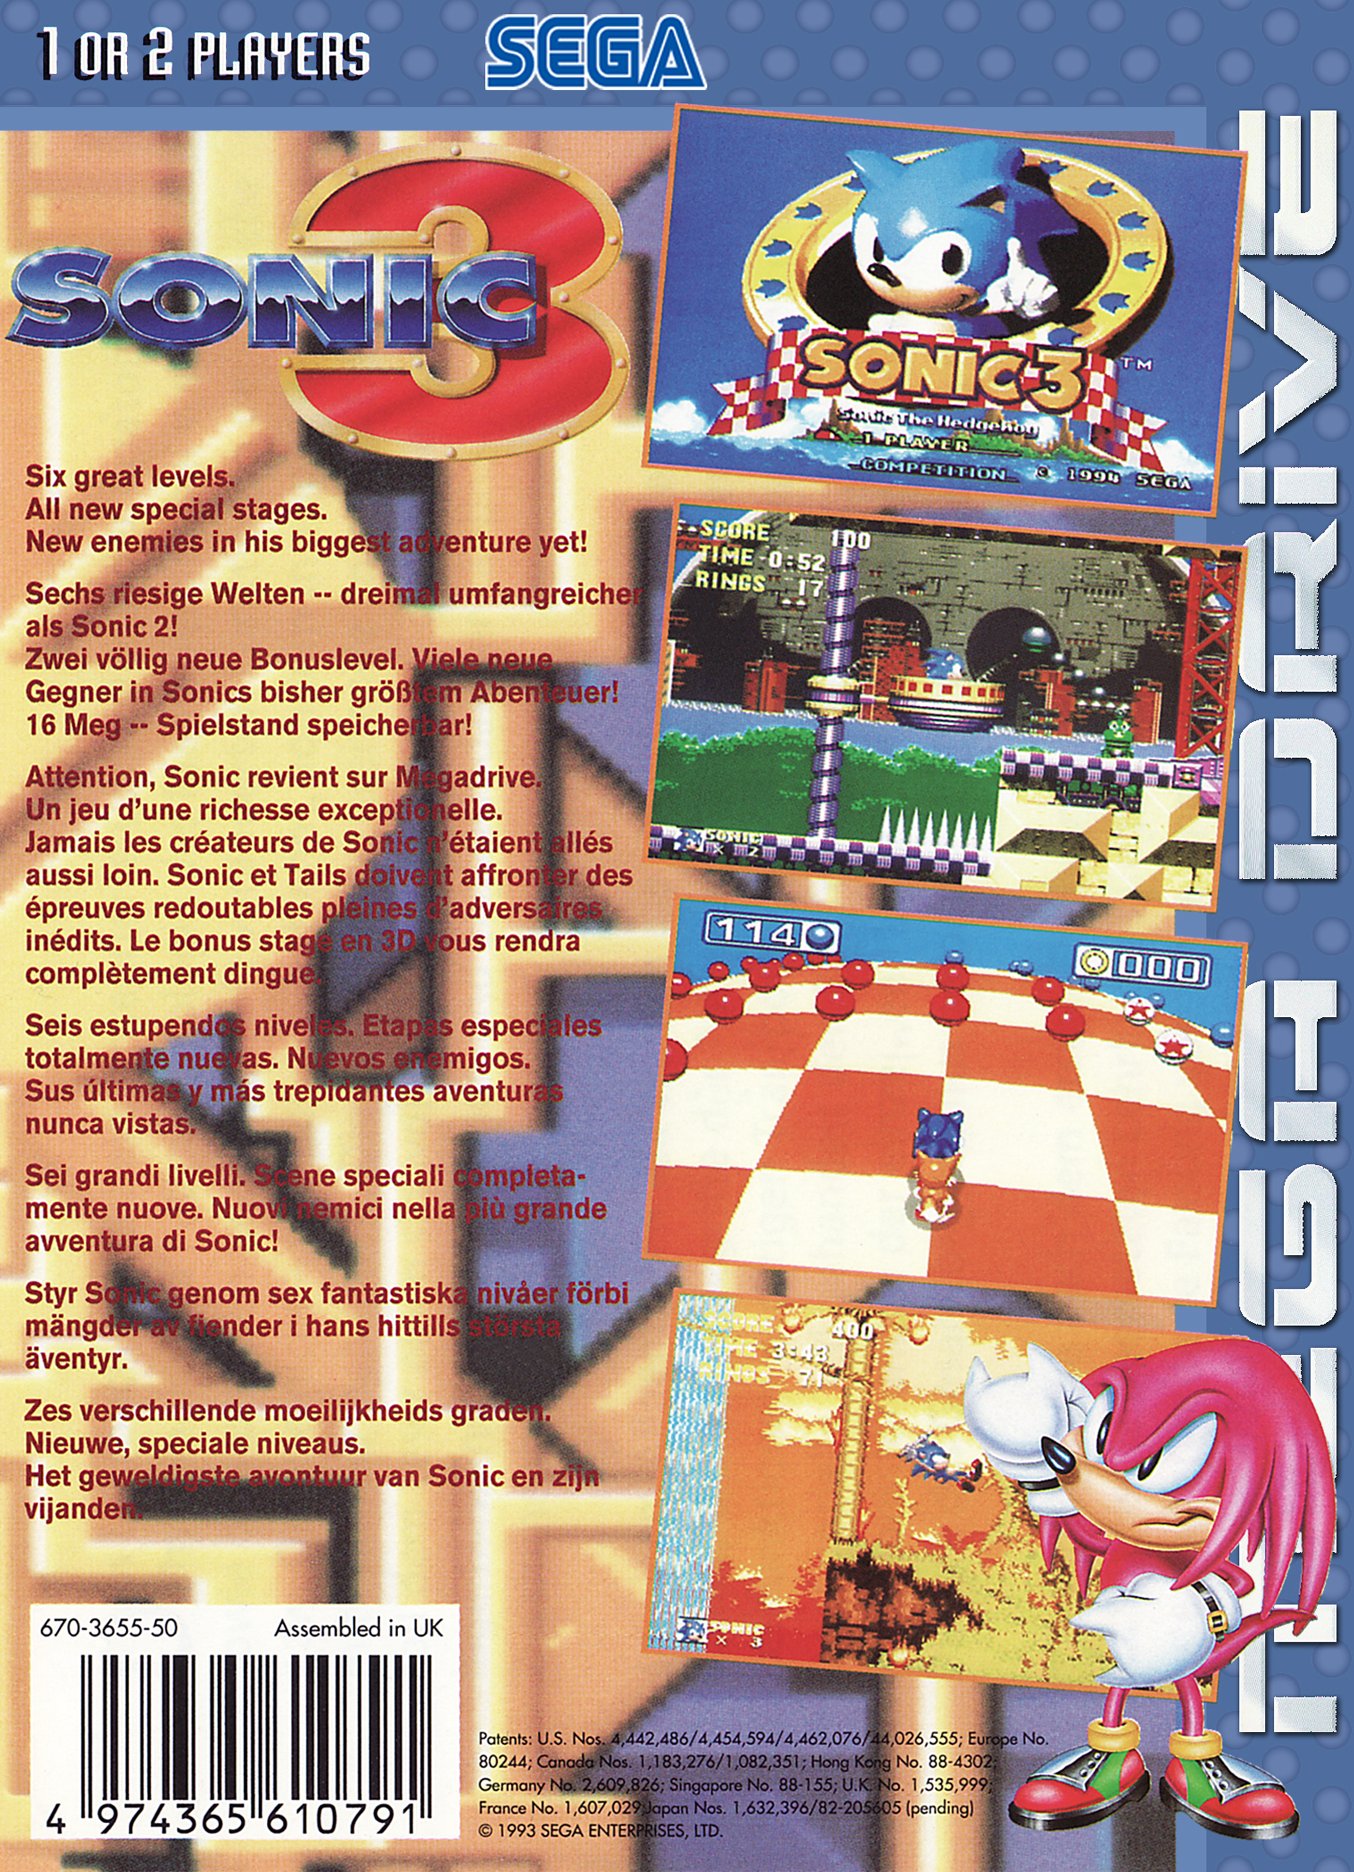 Sonic The Hedgehog 3 - ArcadeFlix